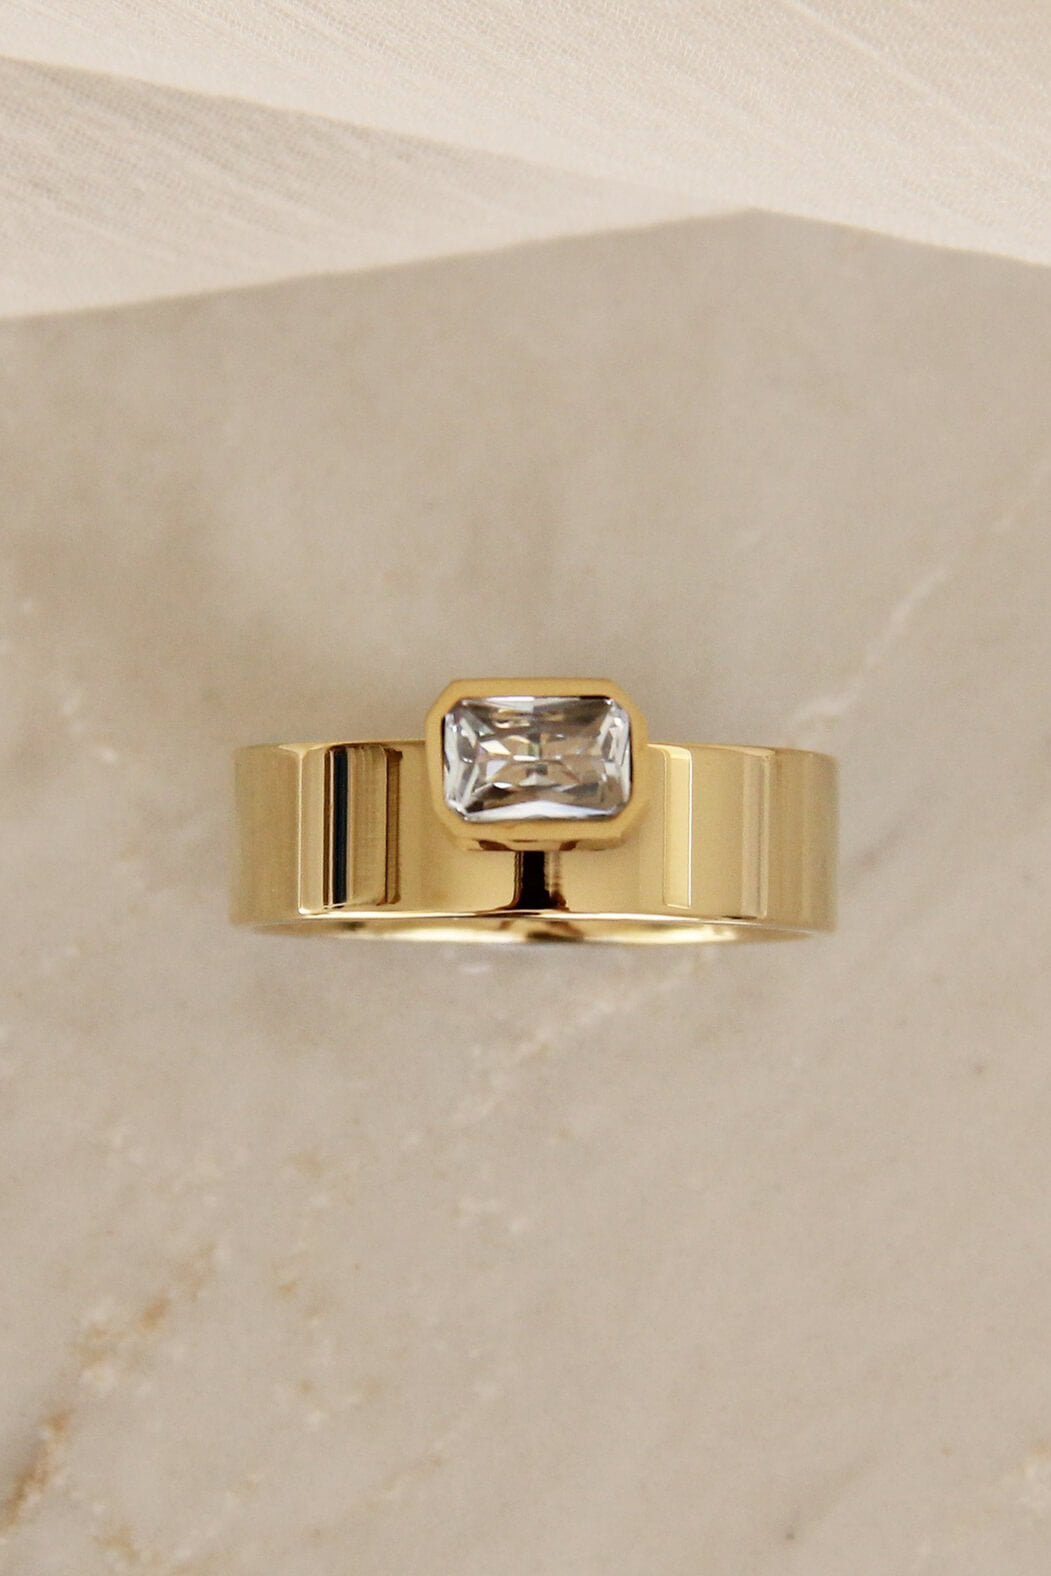 Maive Jewelry CZ emerald cut bezel band ring 